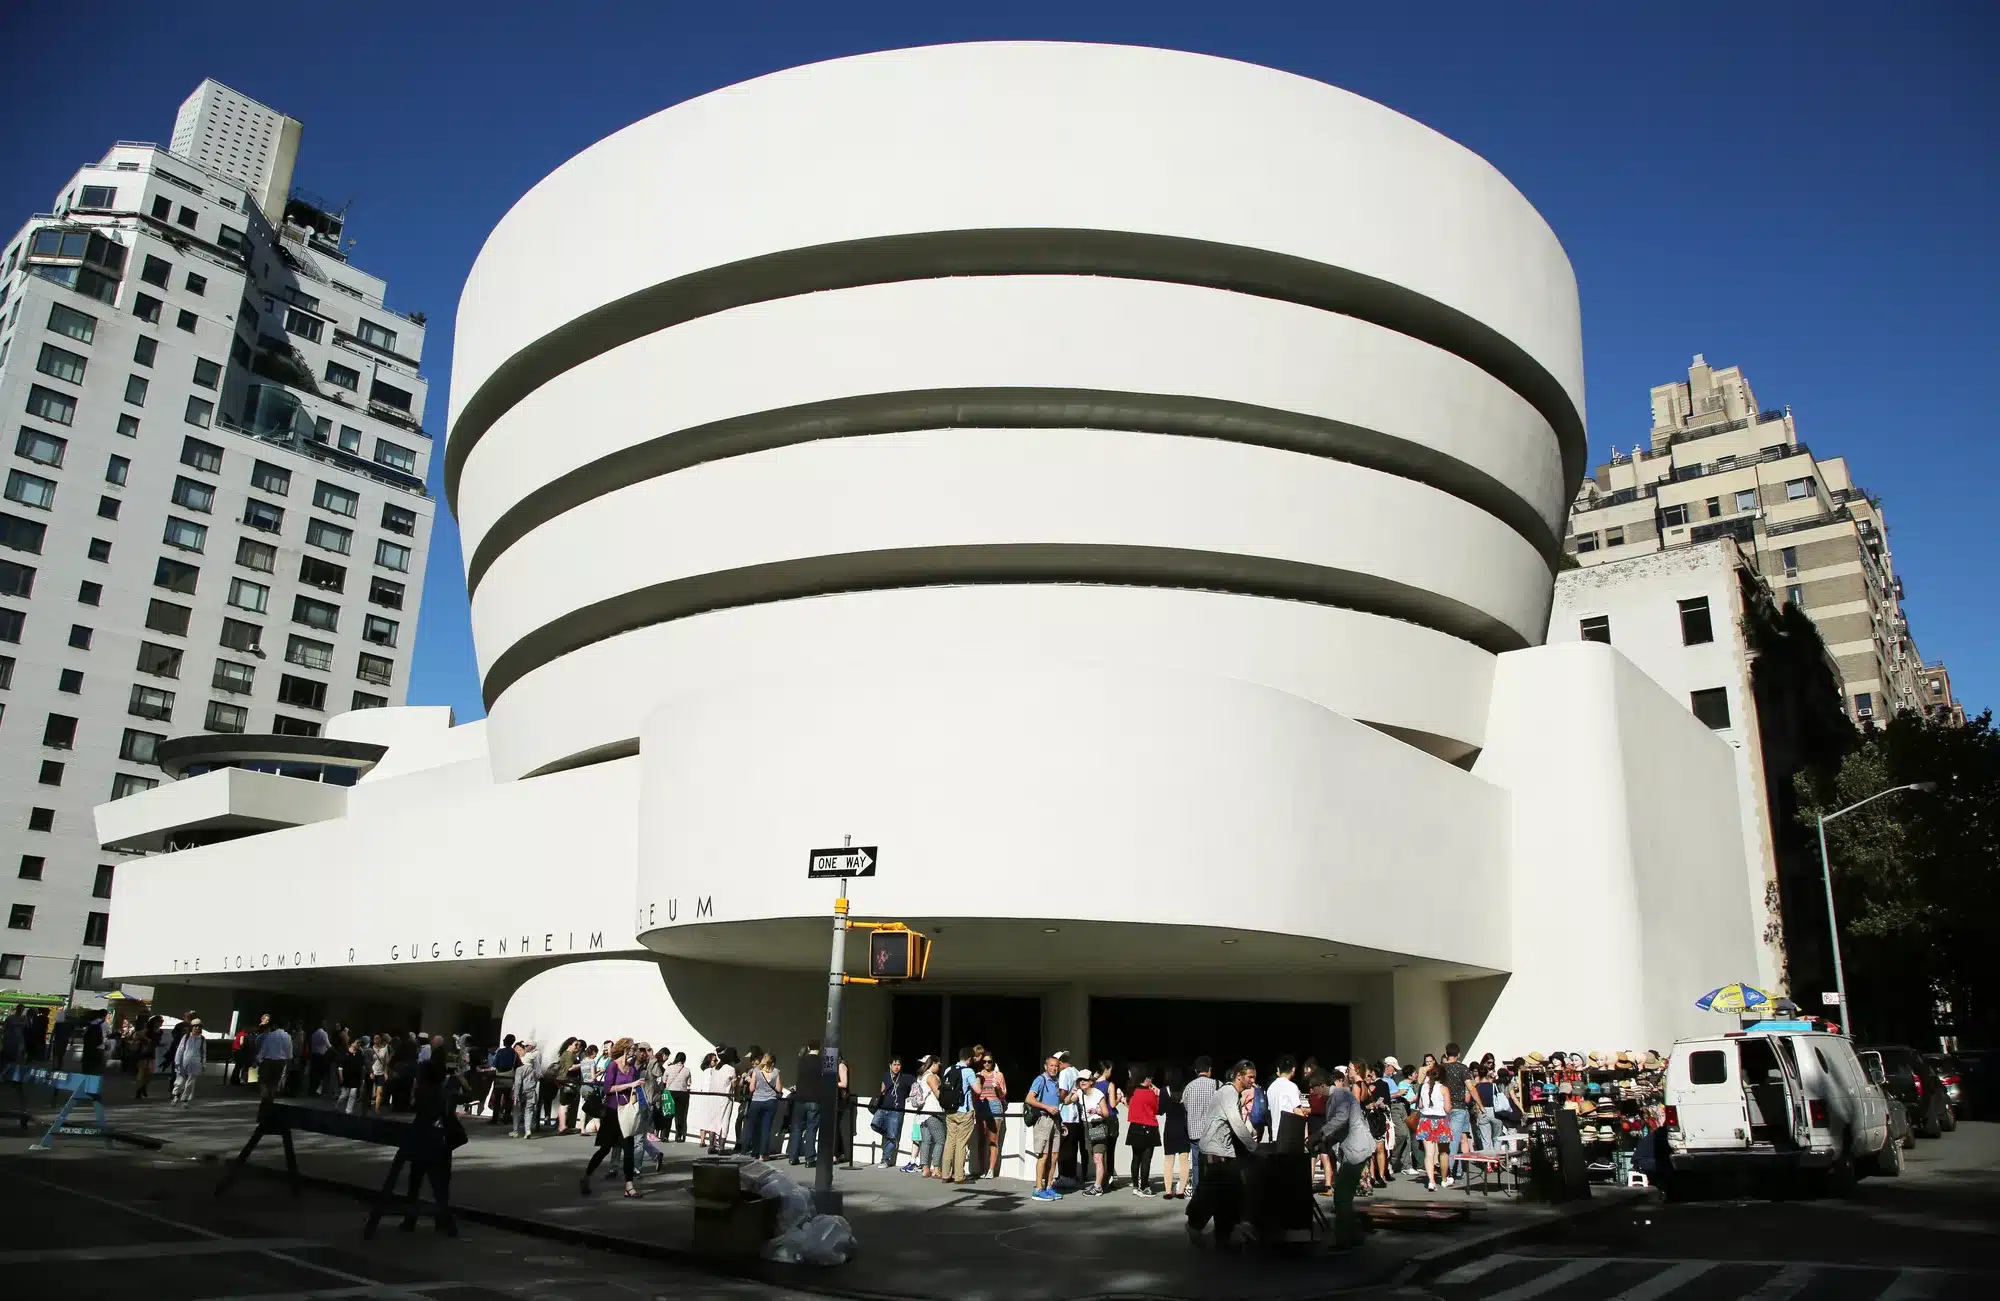 The Solomon R. Guggenheim Museum of modern and contemporary art in Manhattan